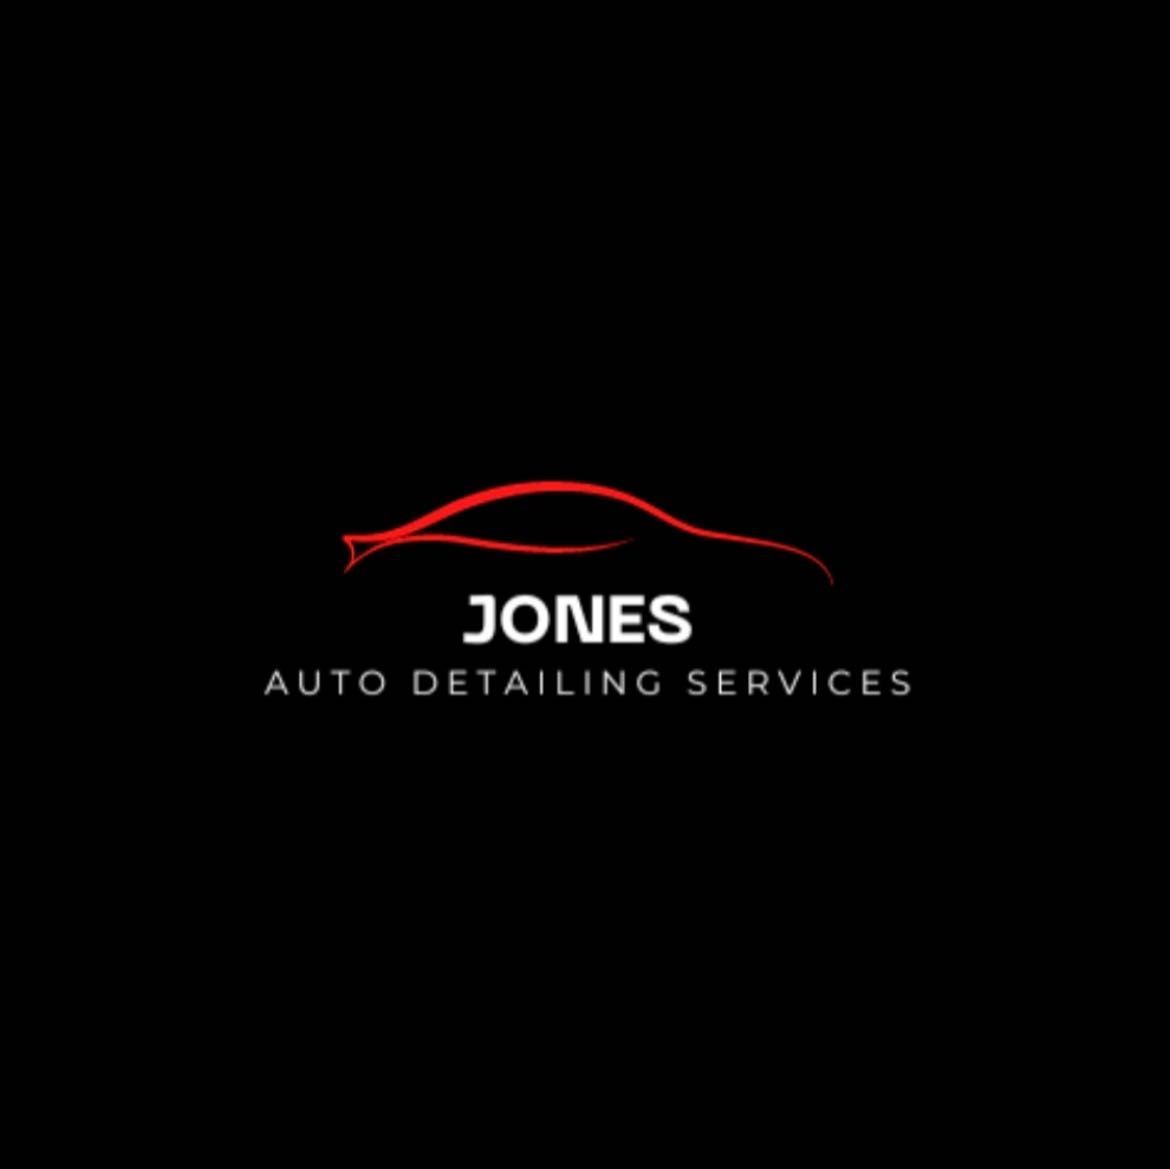 Jones Auto Detailing Services, Eastern Valley Rd, Bessemer, 35022